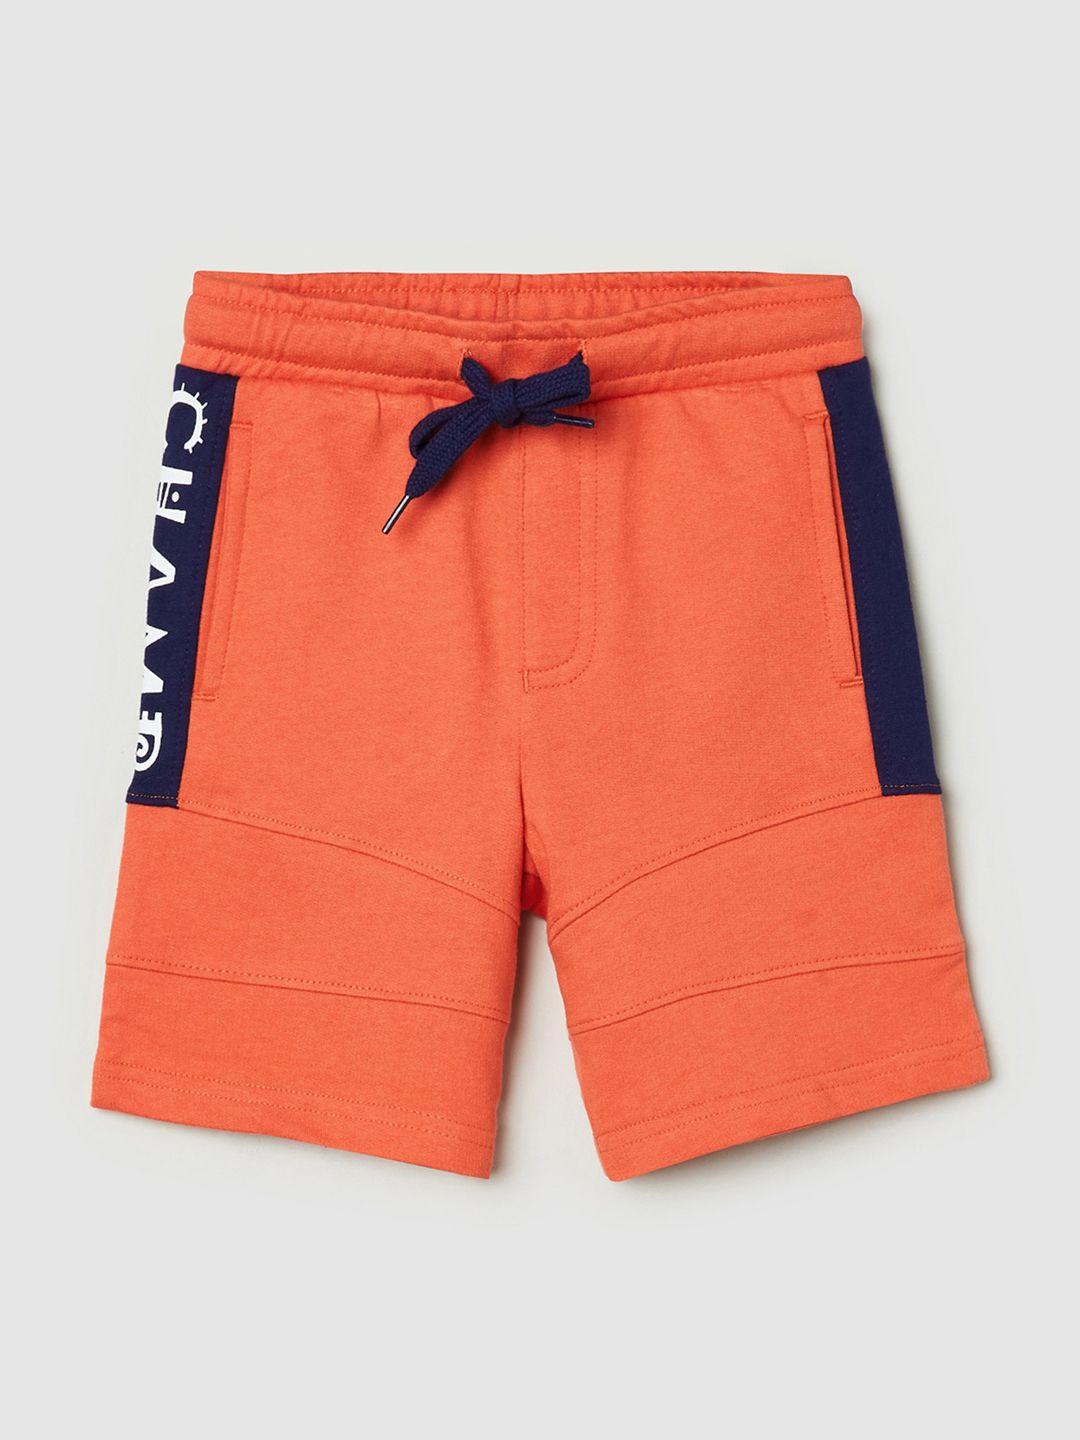 max Boys Orange Shorts